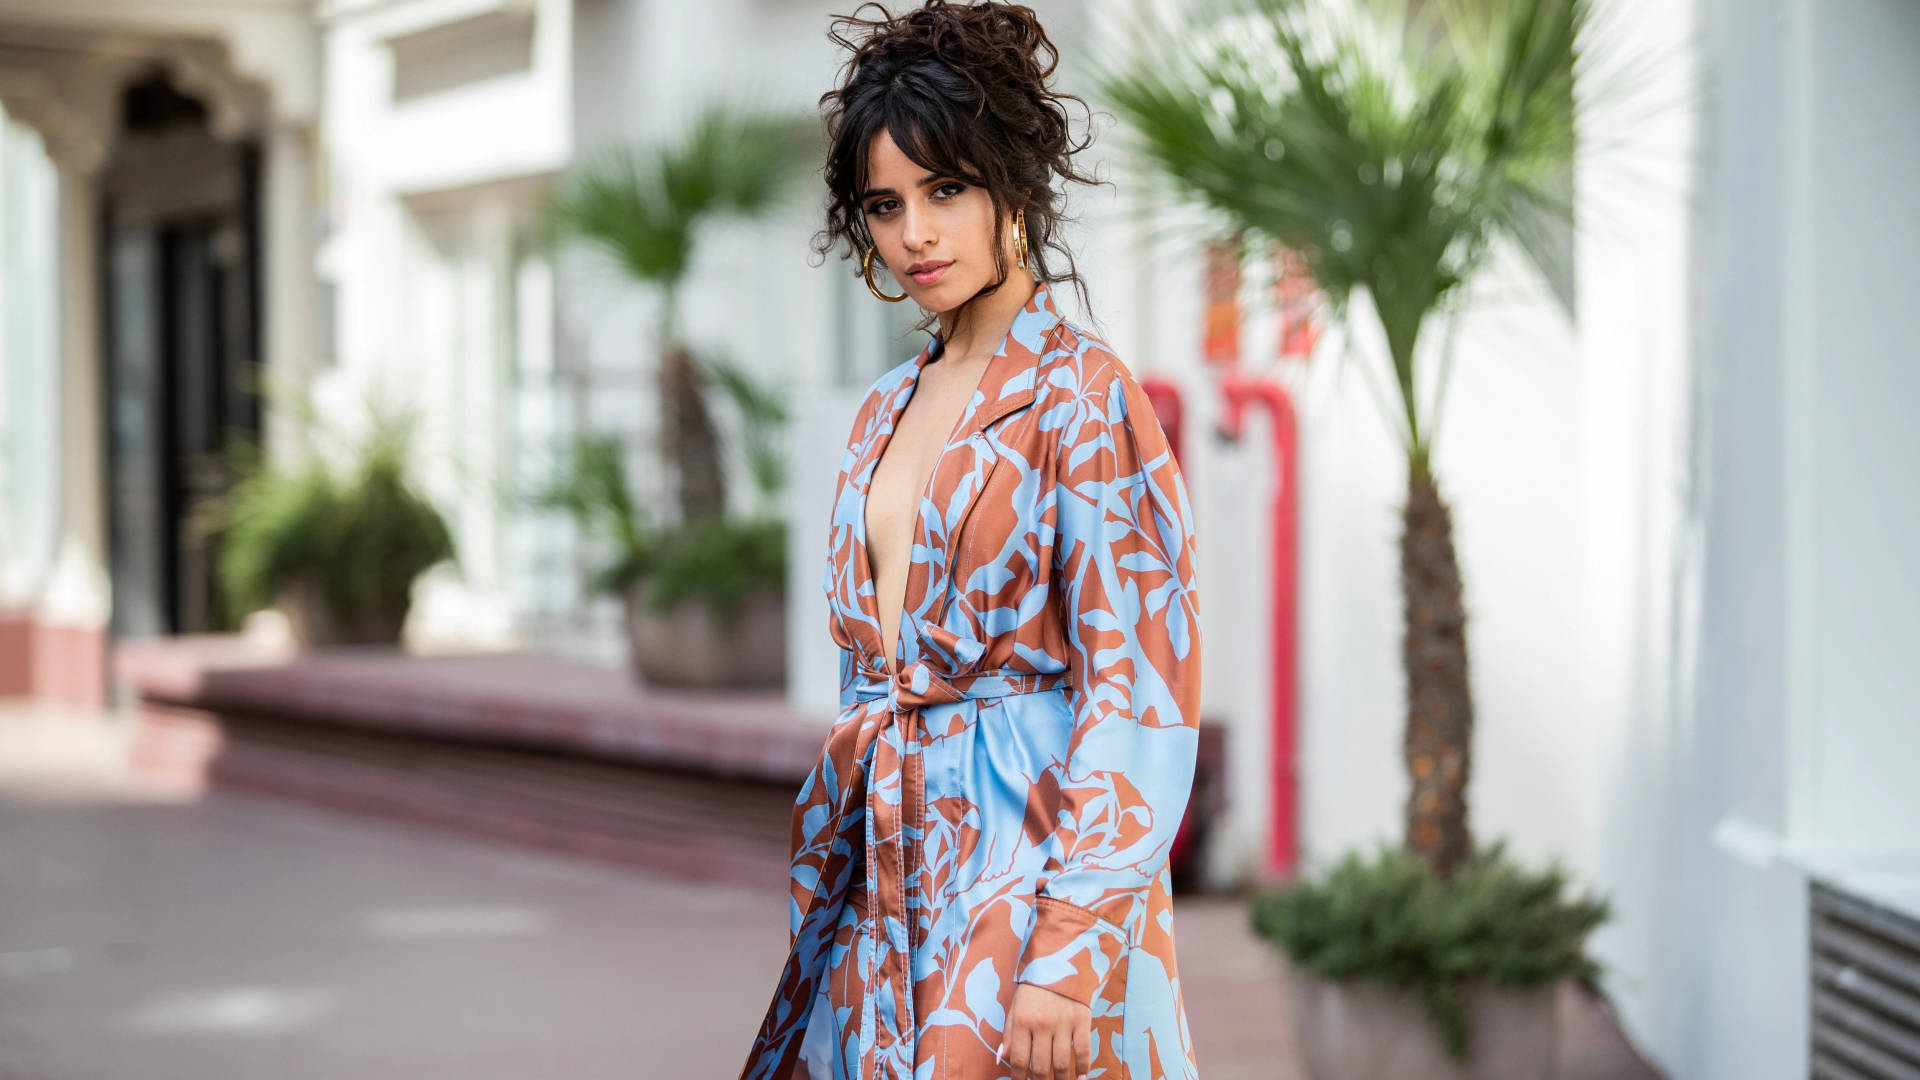 Singer Camila Cabello In Coat Dress Wallpaper